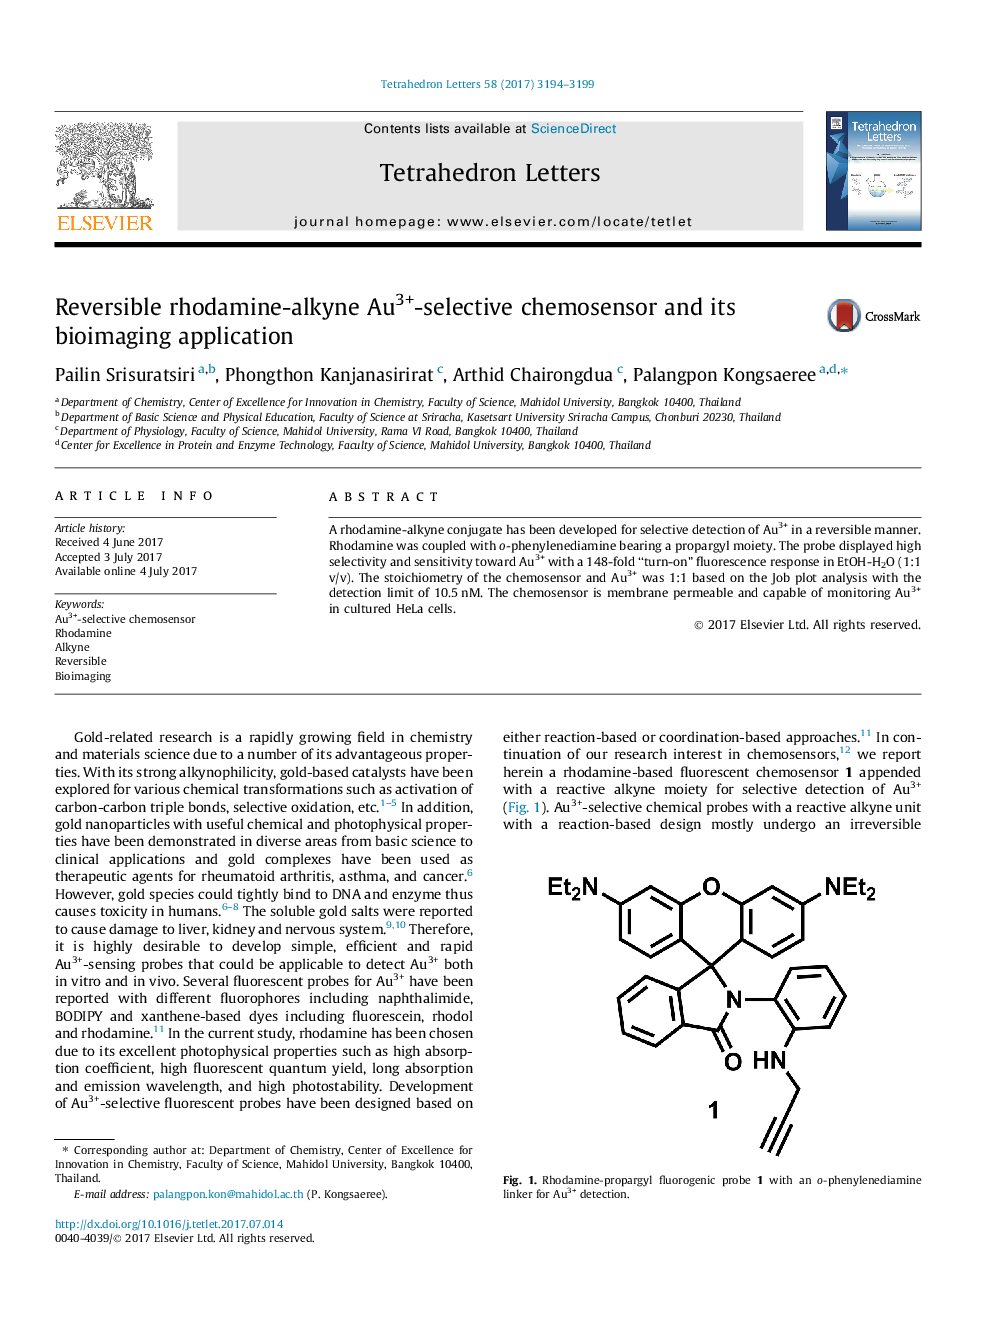 Reversible rhodamine-alkyne Au3+-selective chemosensor and its bioimaging application